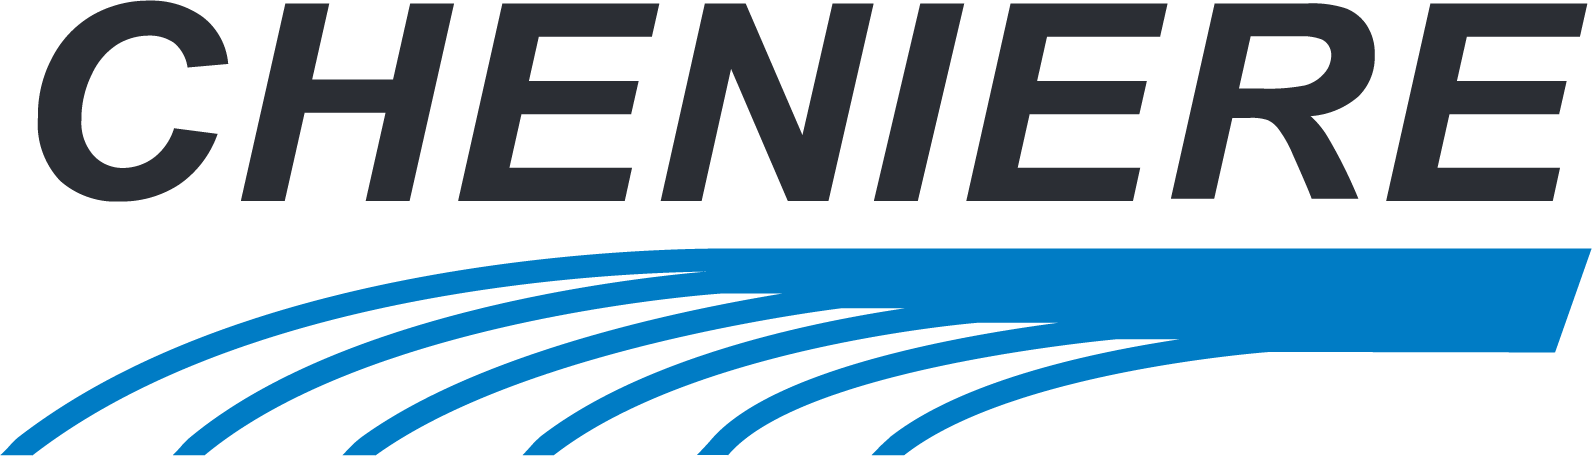 Cheniere Energy Logo png